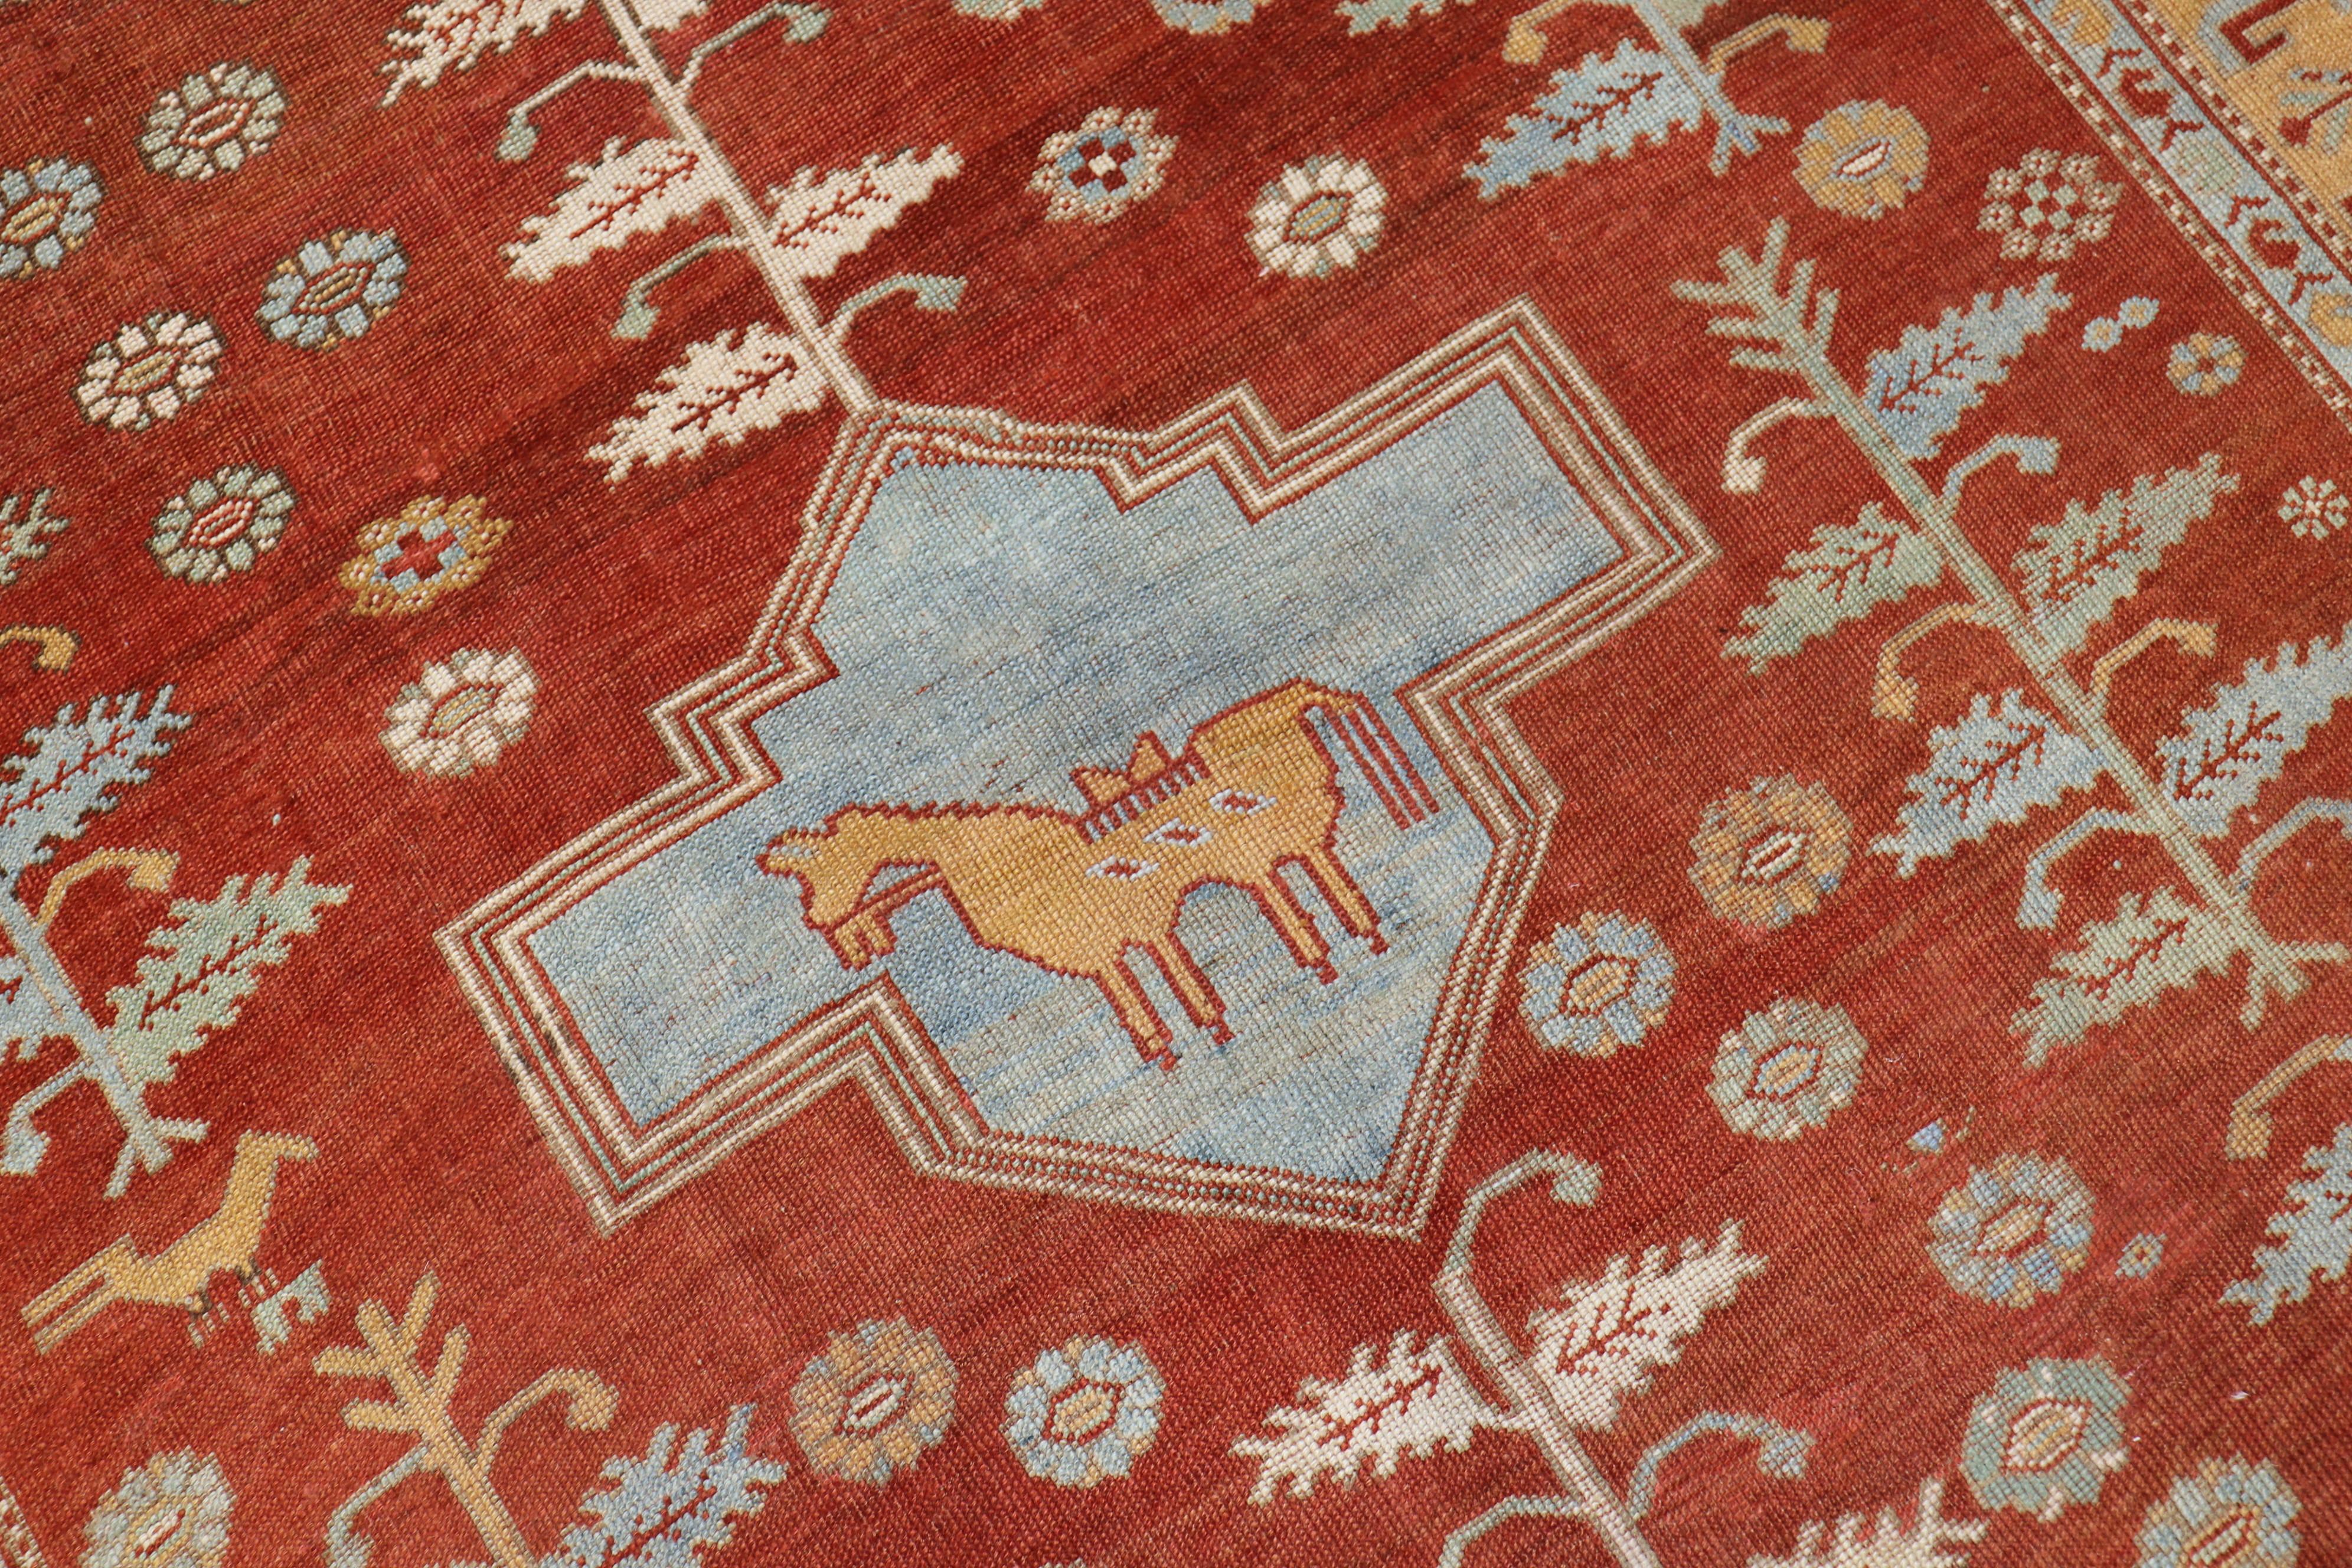 Kazak Quirky Folk Art Tribal Camel Medallion Caucasian Rug For Sale